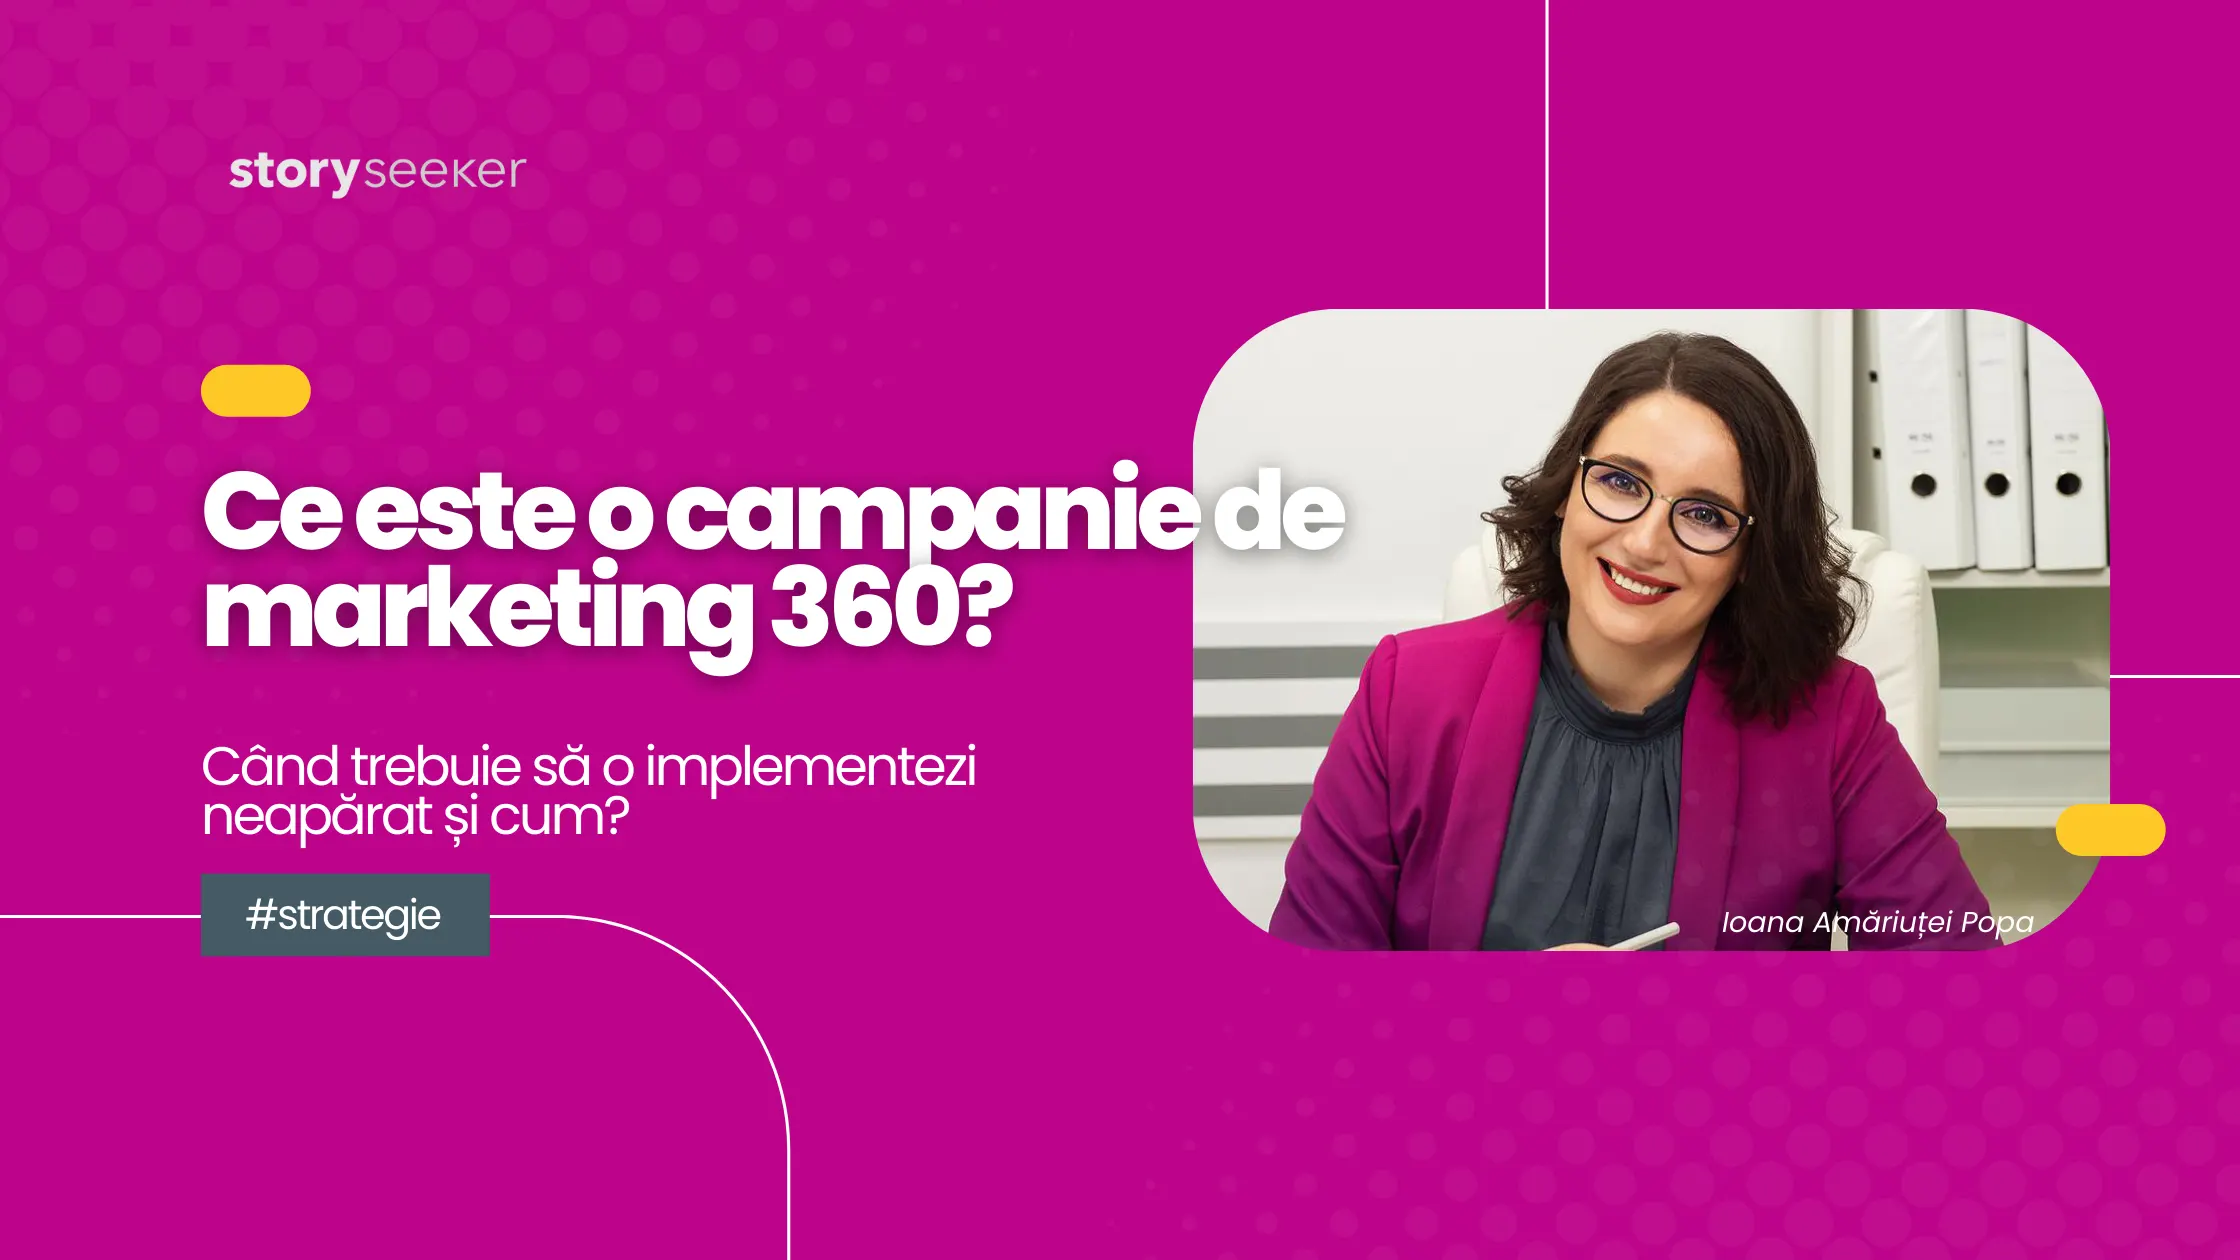 story seeker campanii marketing 360